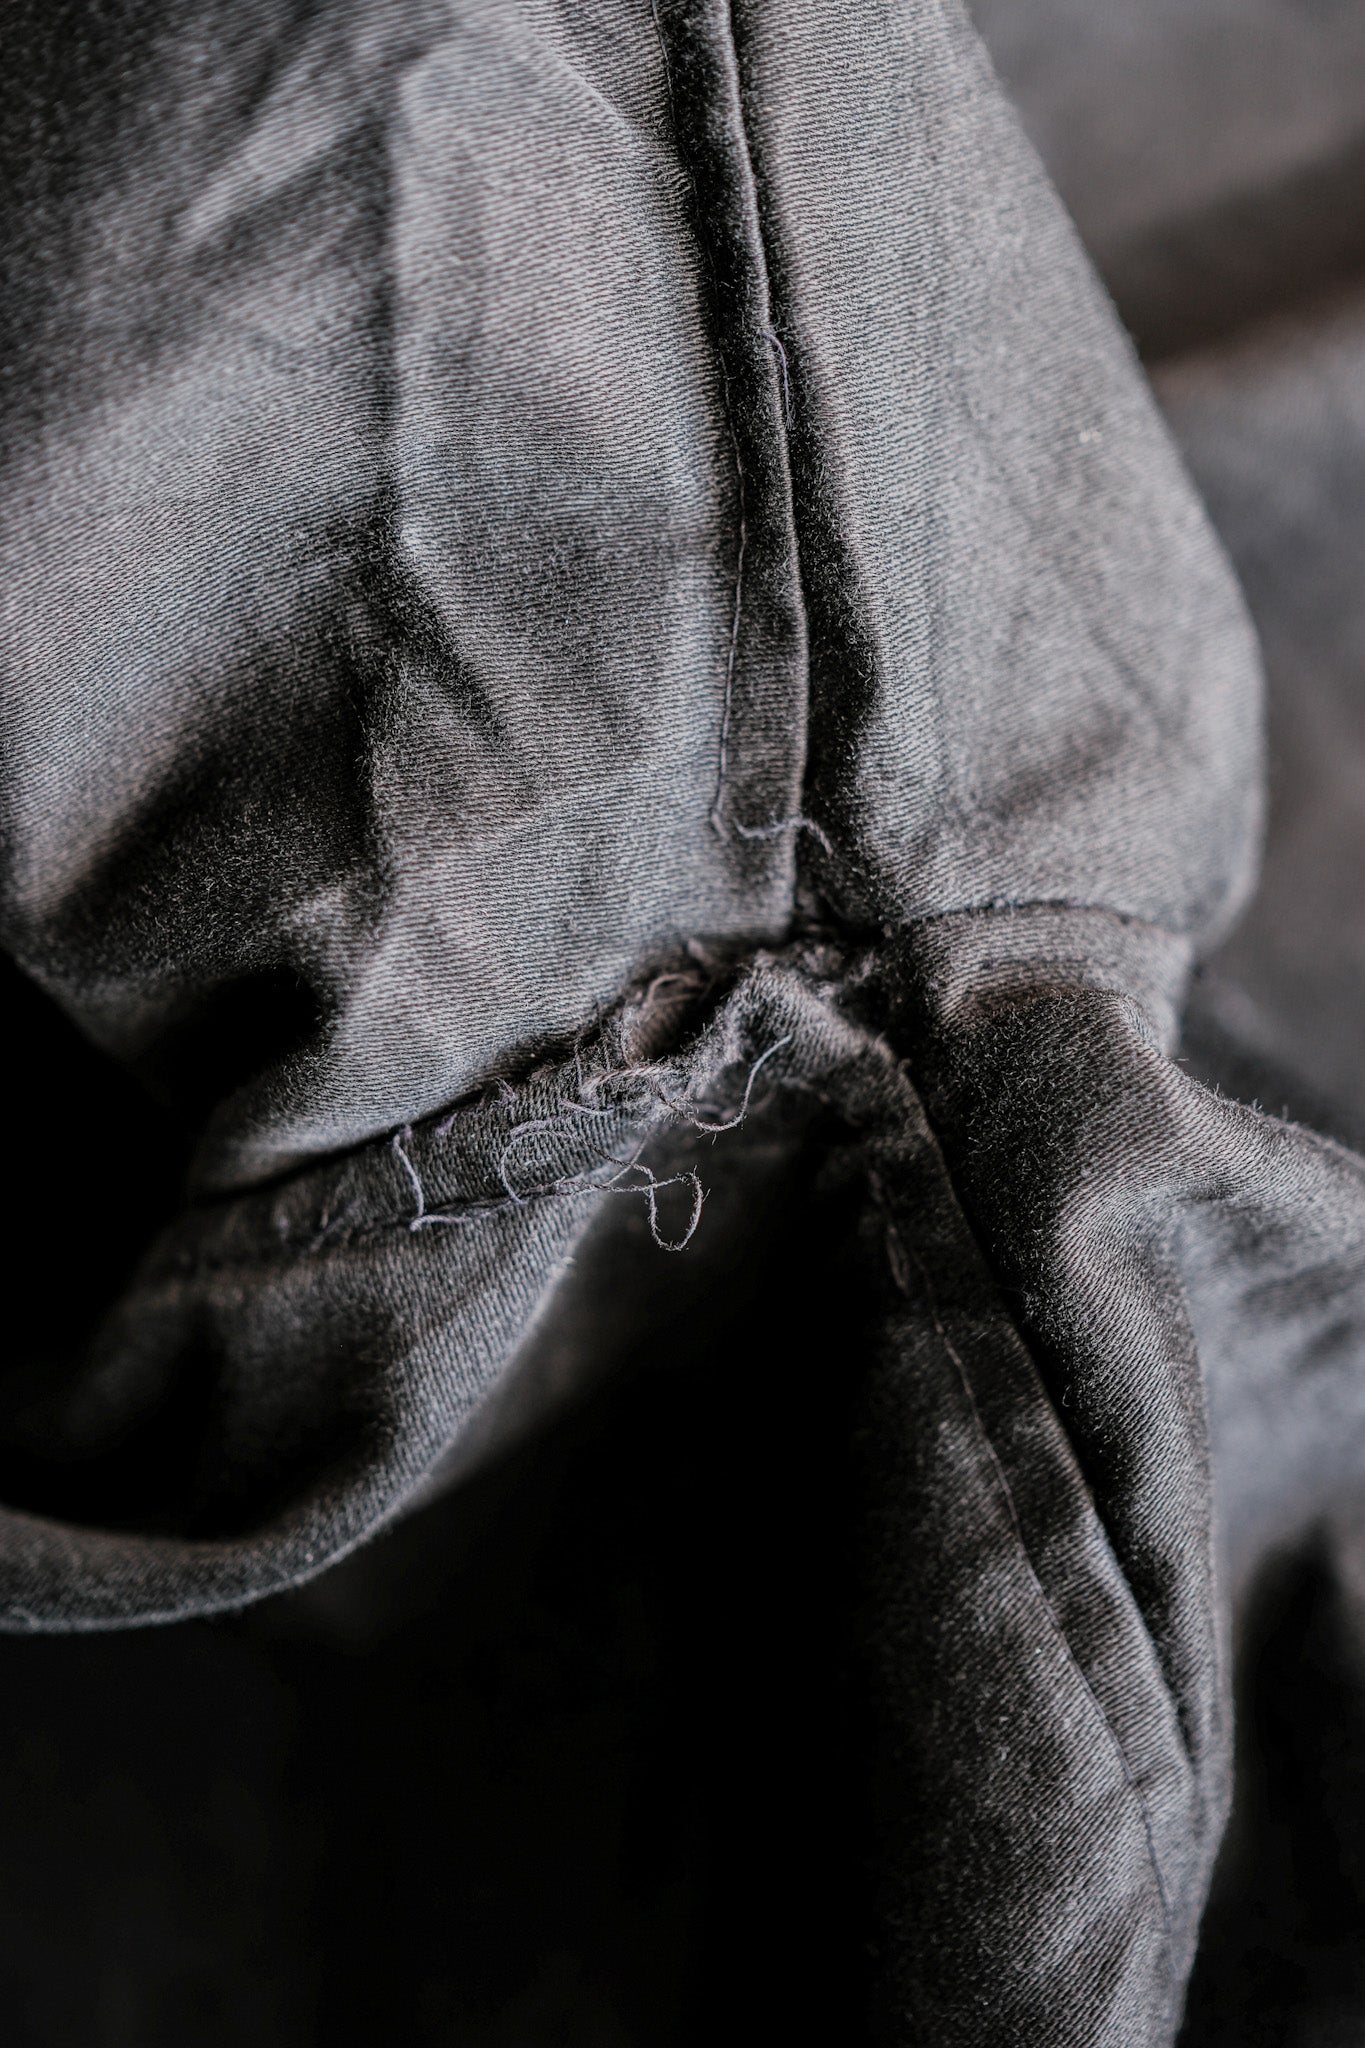 【~30's】French Vintage Black Moleskin Work Jacket "6 Buttons"